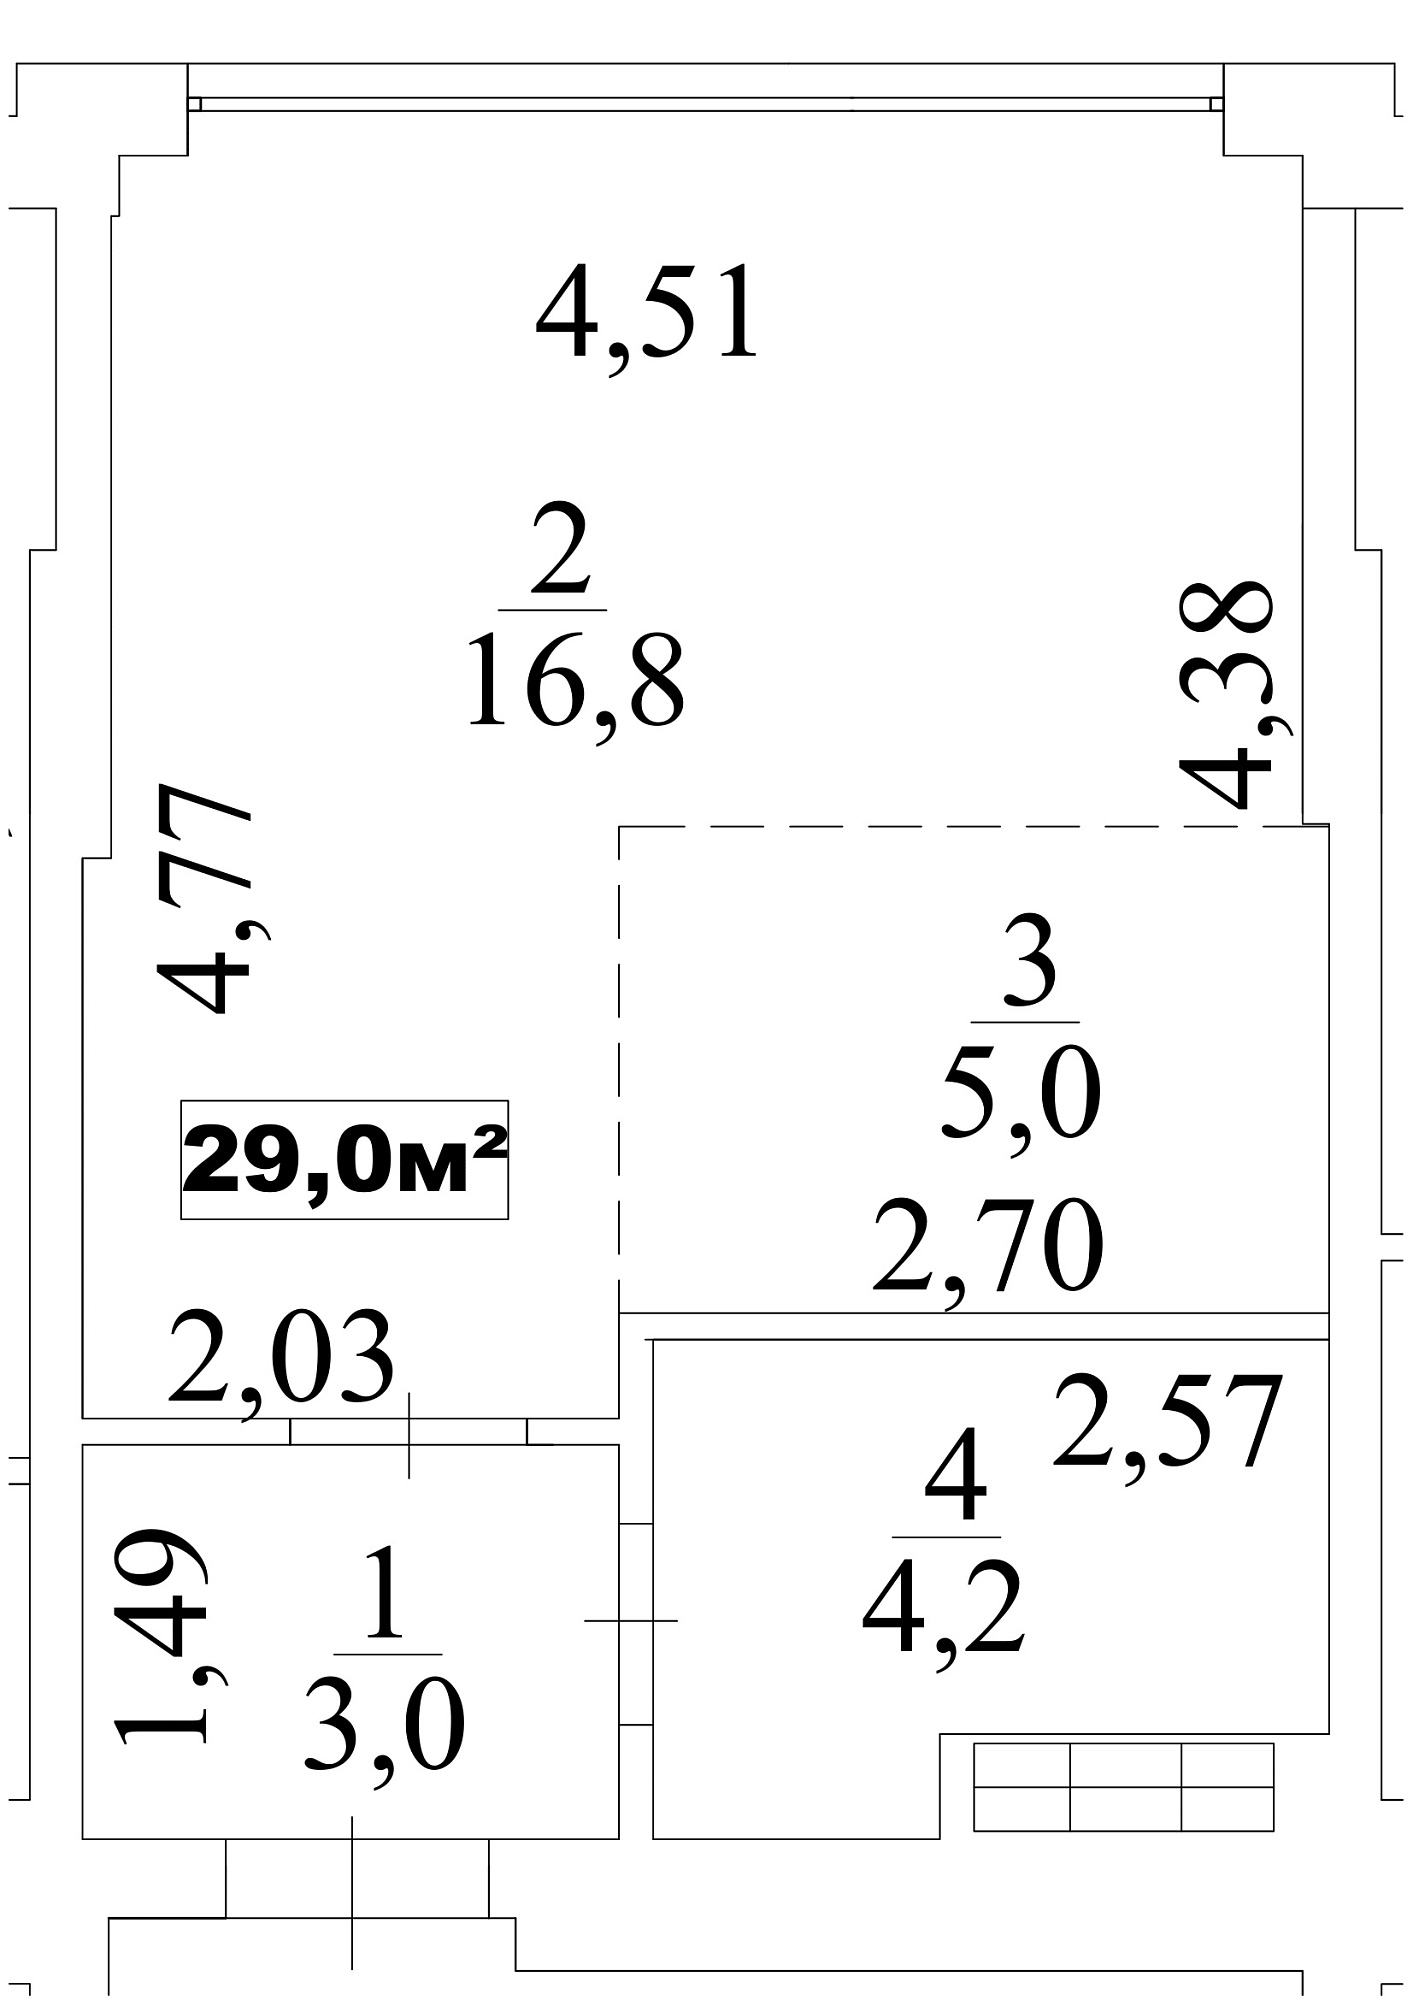 Planning Smart flats area 29m2, AB-10-02/00014.